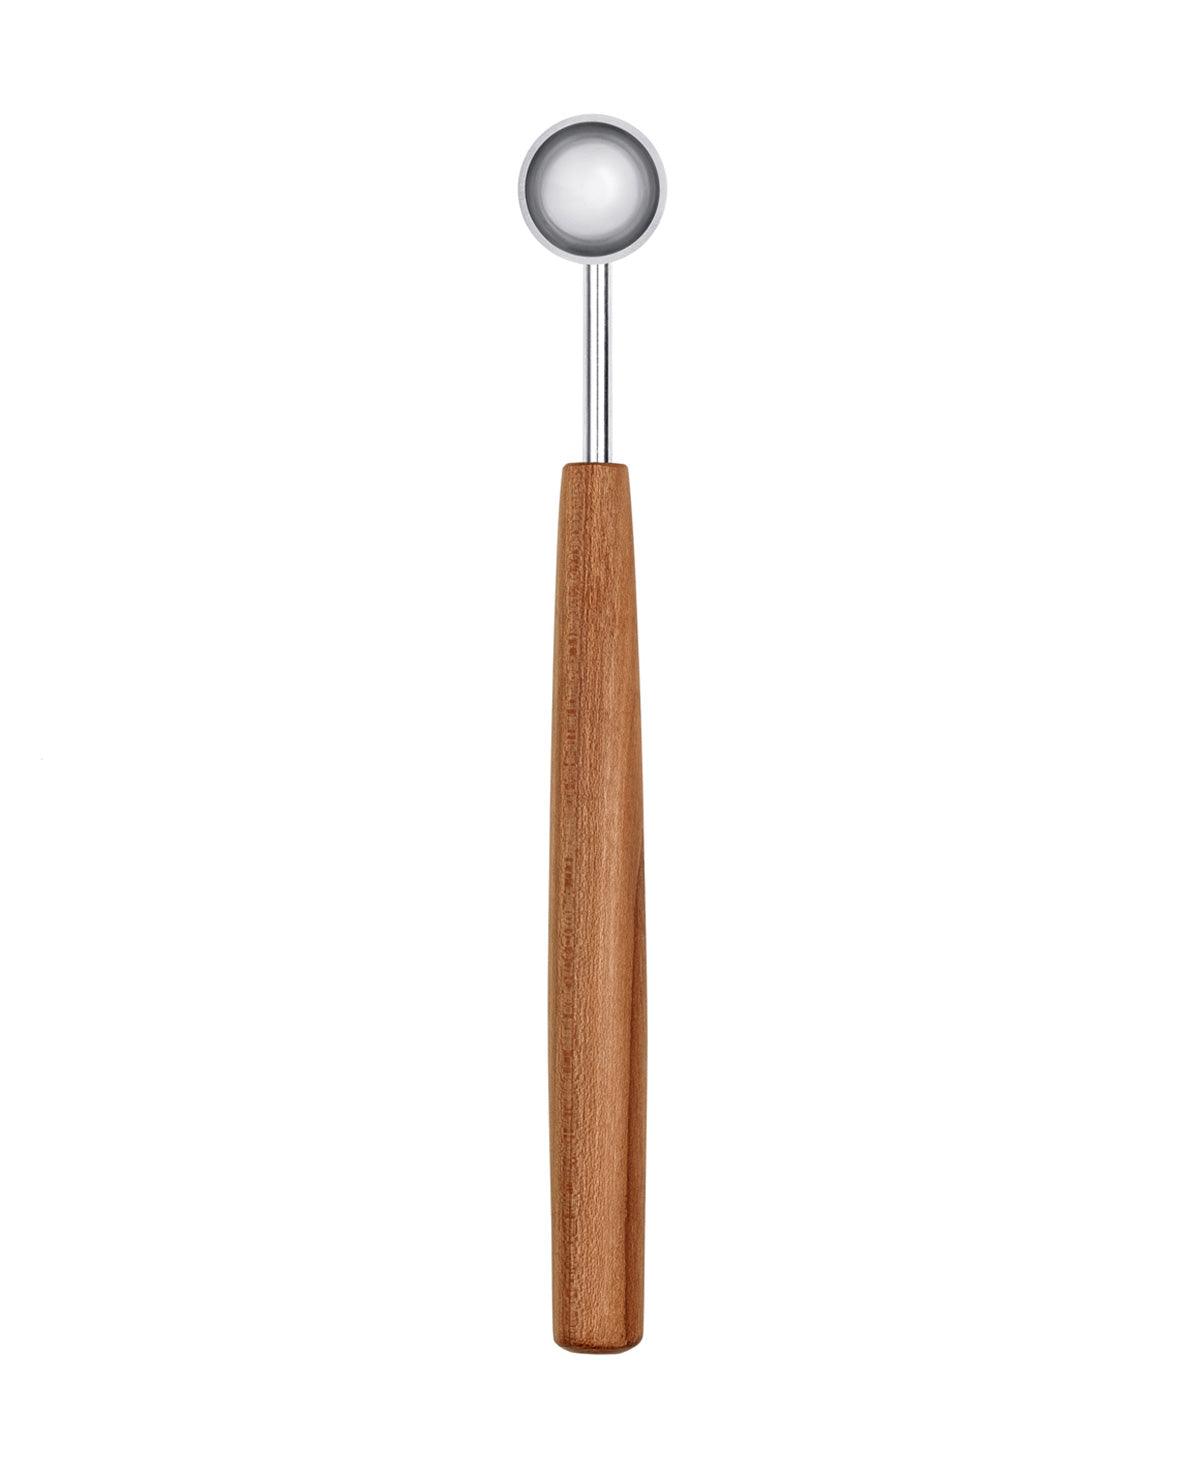 [Triangle] Spice Measuring Spoon Set, 3-Piece, in Gift Box - HANKOOK